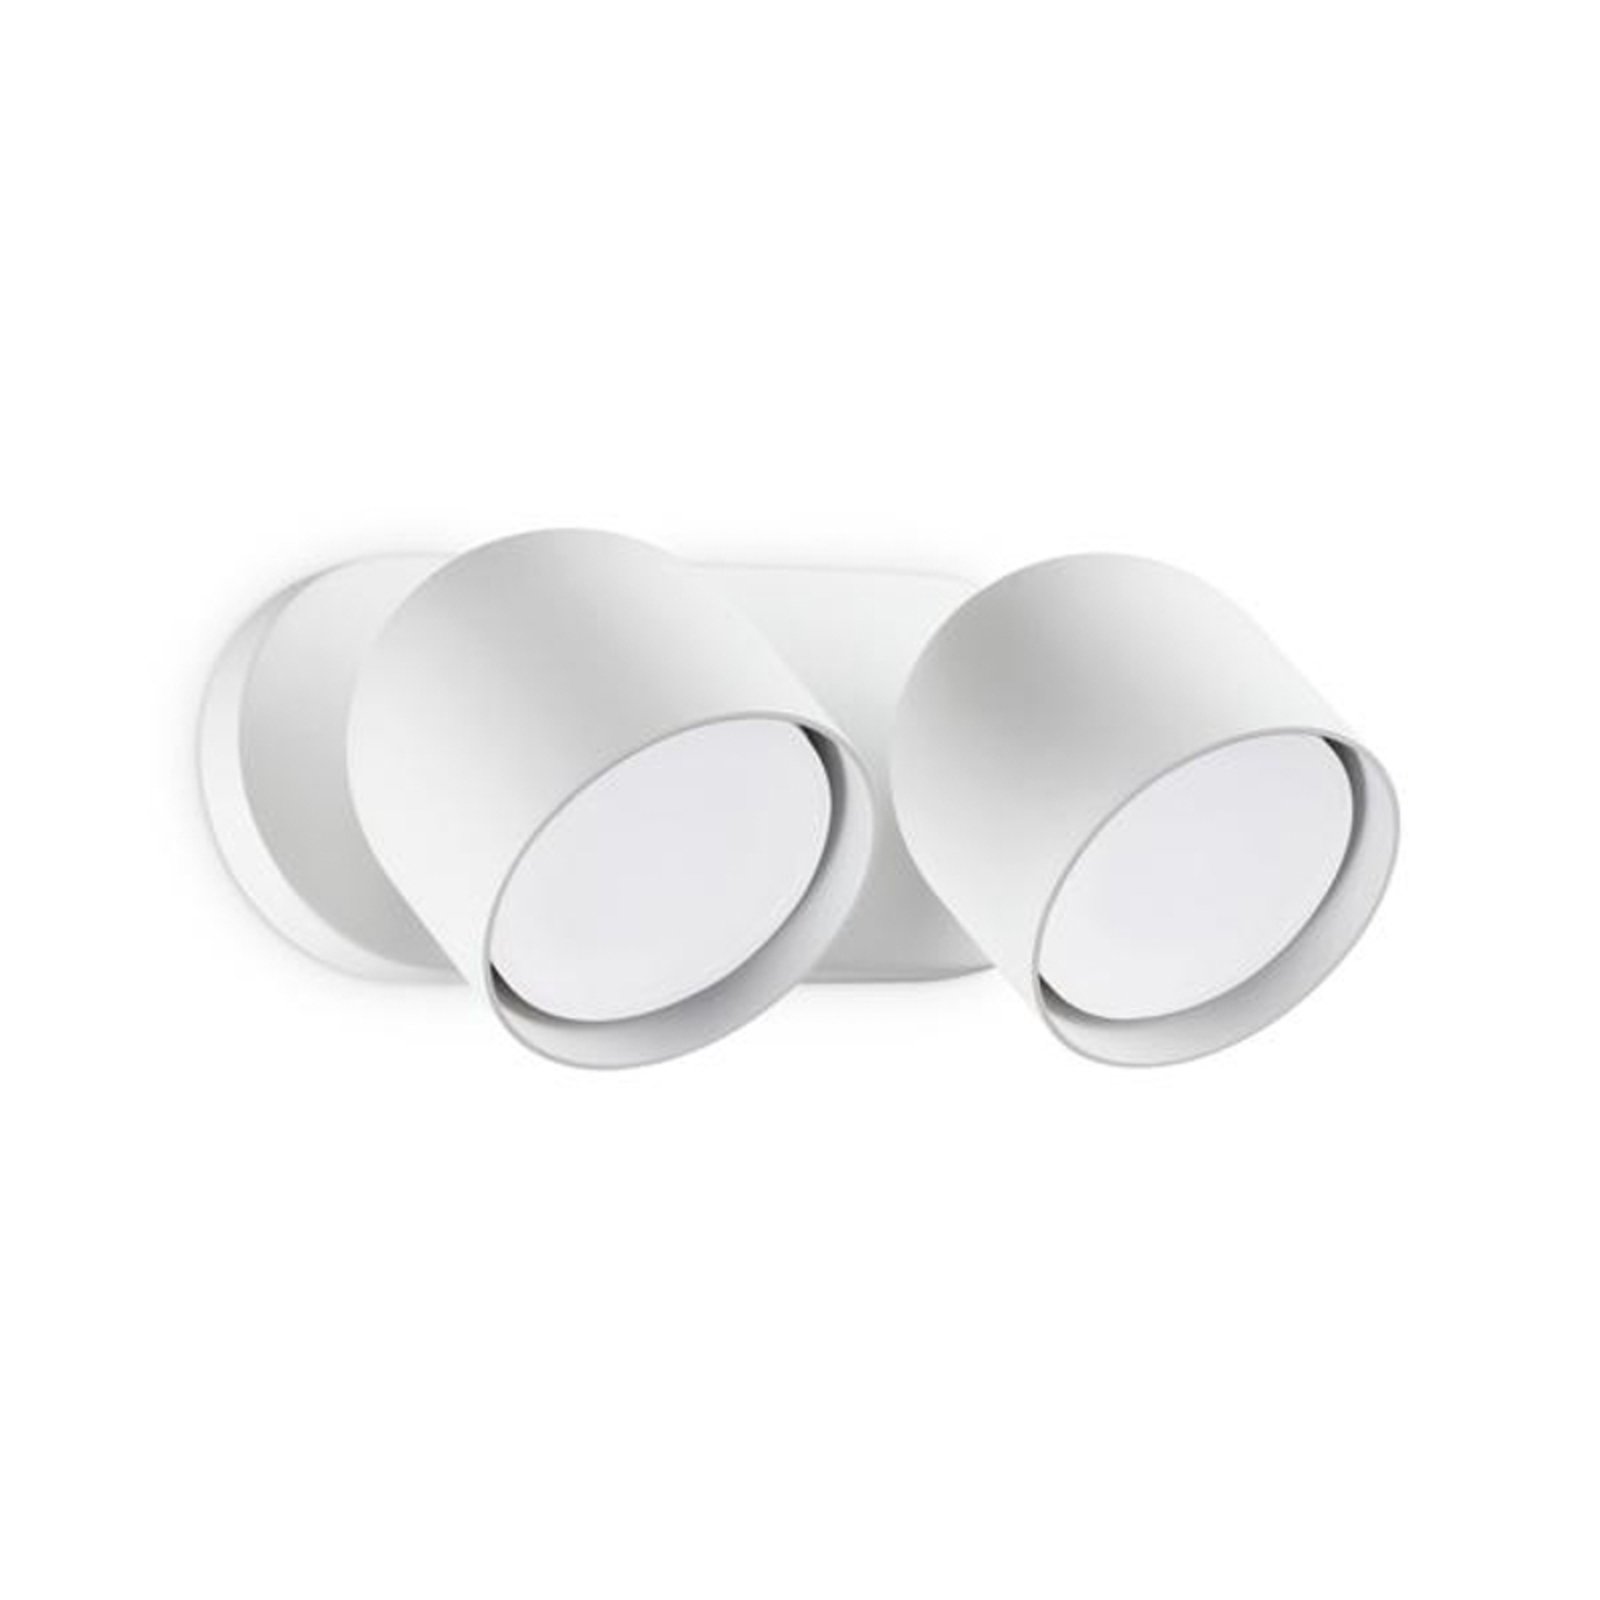 Ideal Lux applique Dodo, bianco, a 2 luci, metallo Ø 8,5 cm